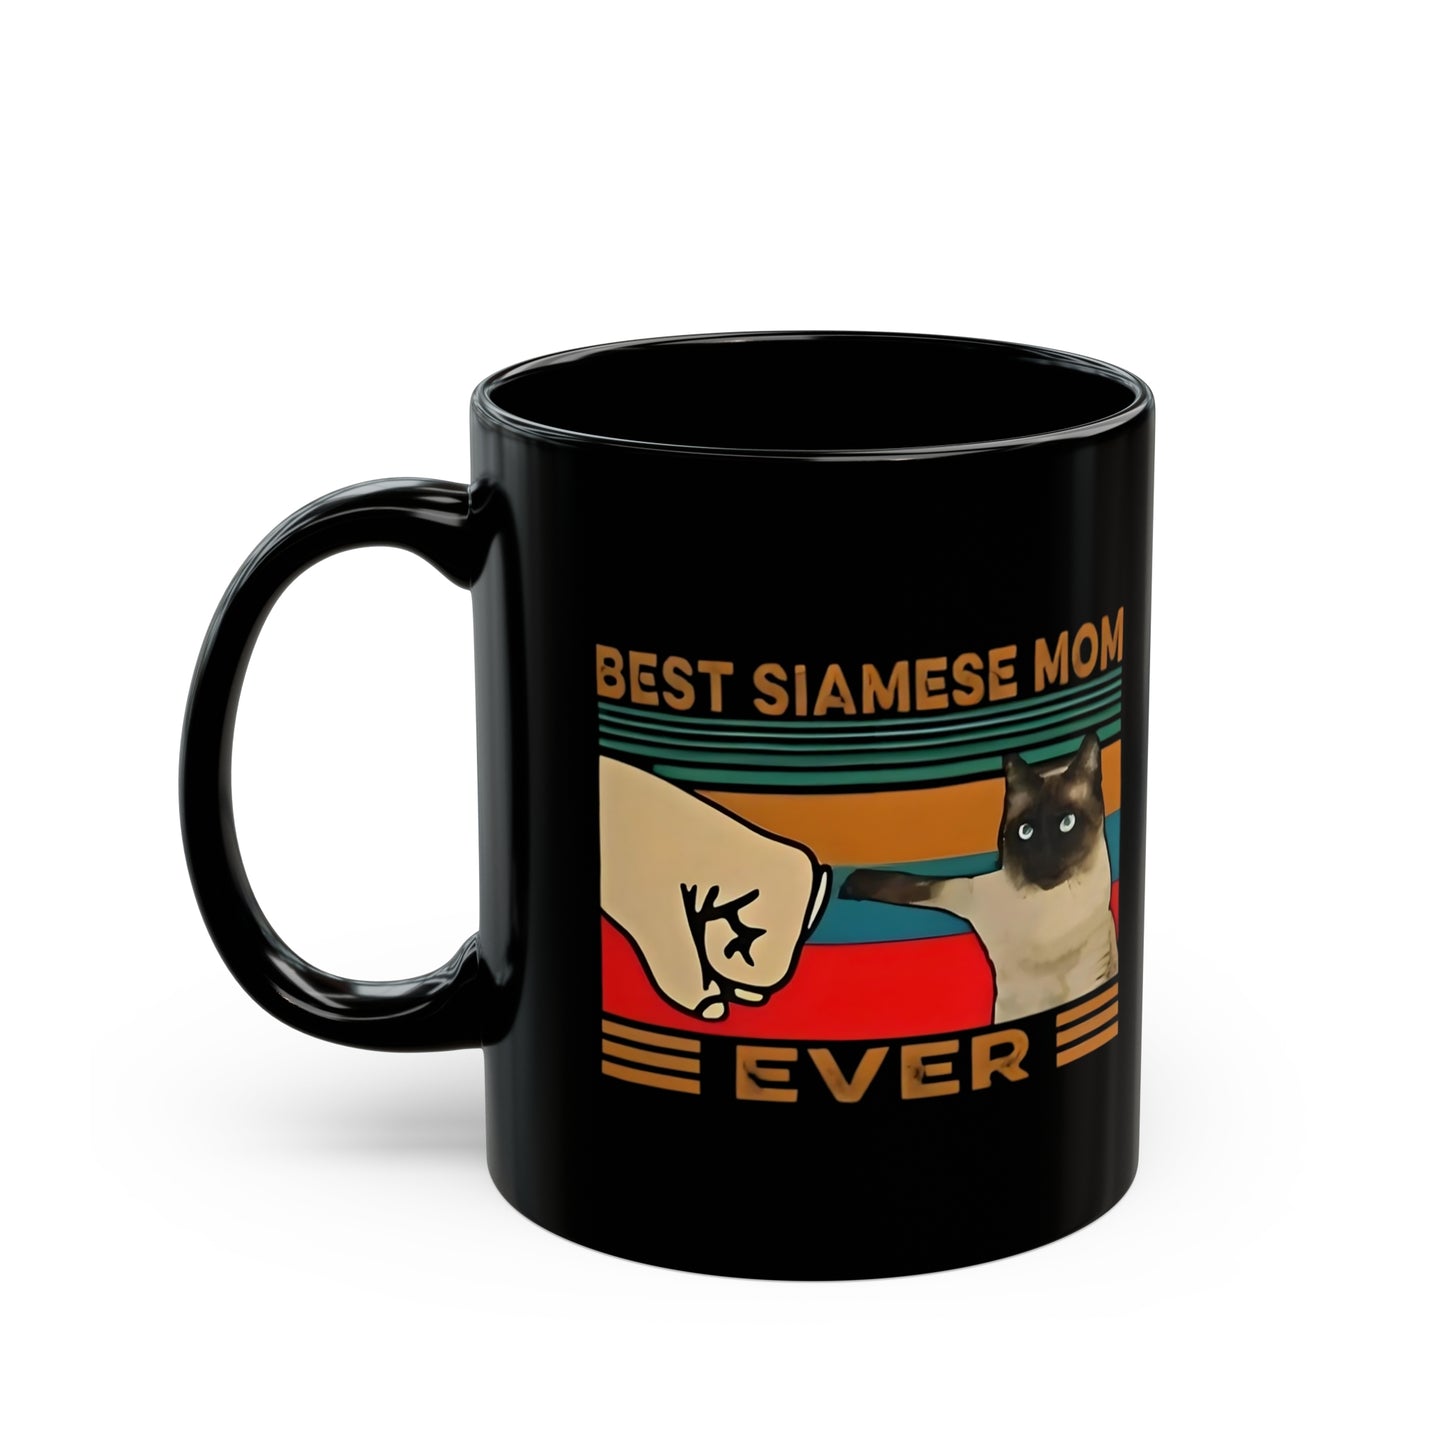 "Best Siamese Mom" Black Mug 11oz